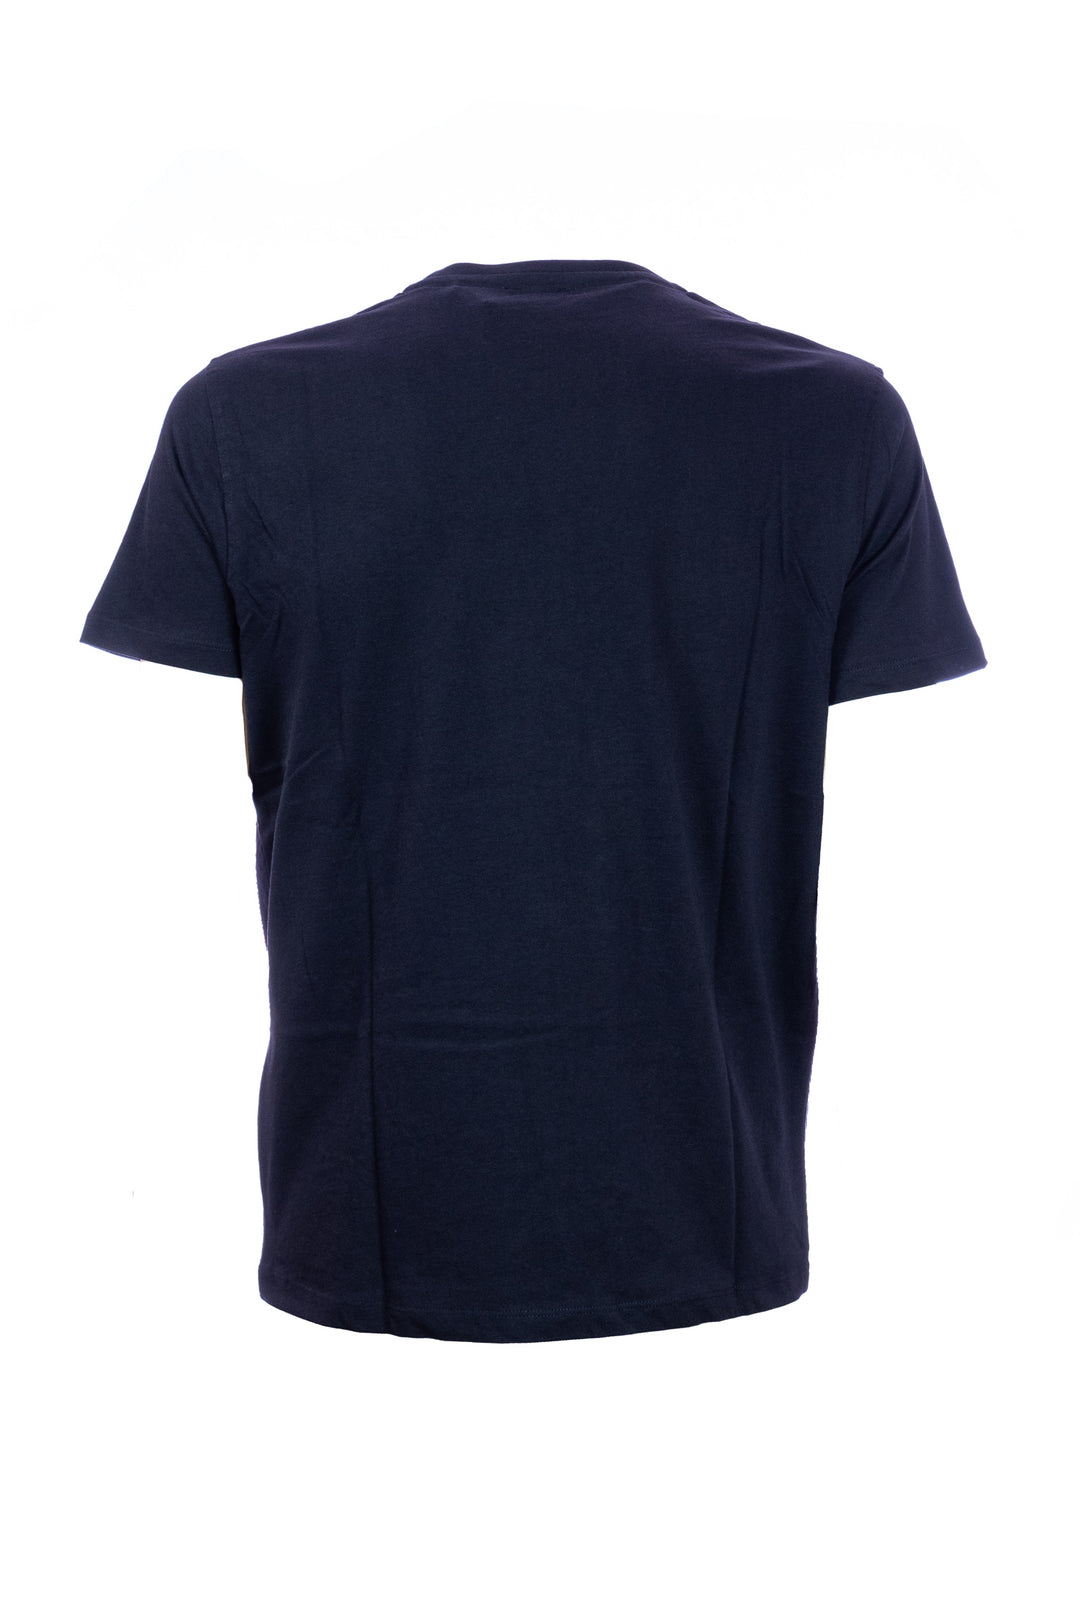 U.S. POLO ASSN. T-shirt blu navy in cotone con logo ricamato sul petto - Mancinelli 1954